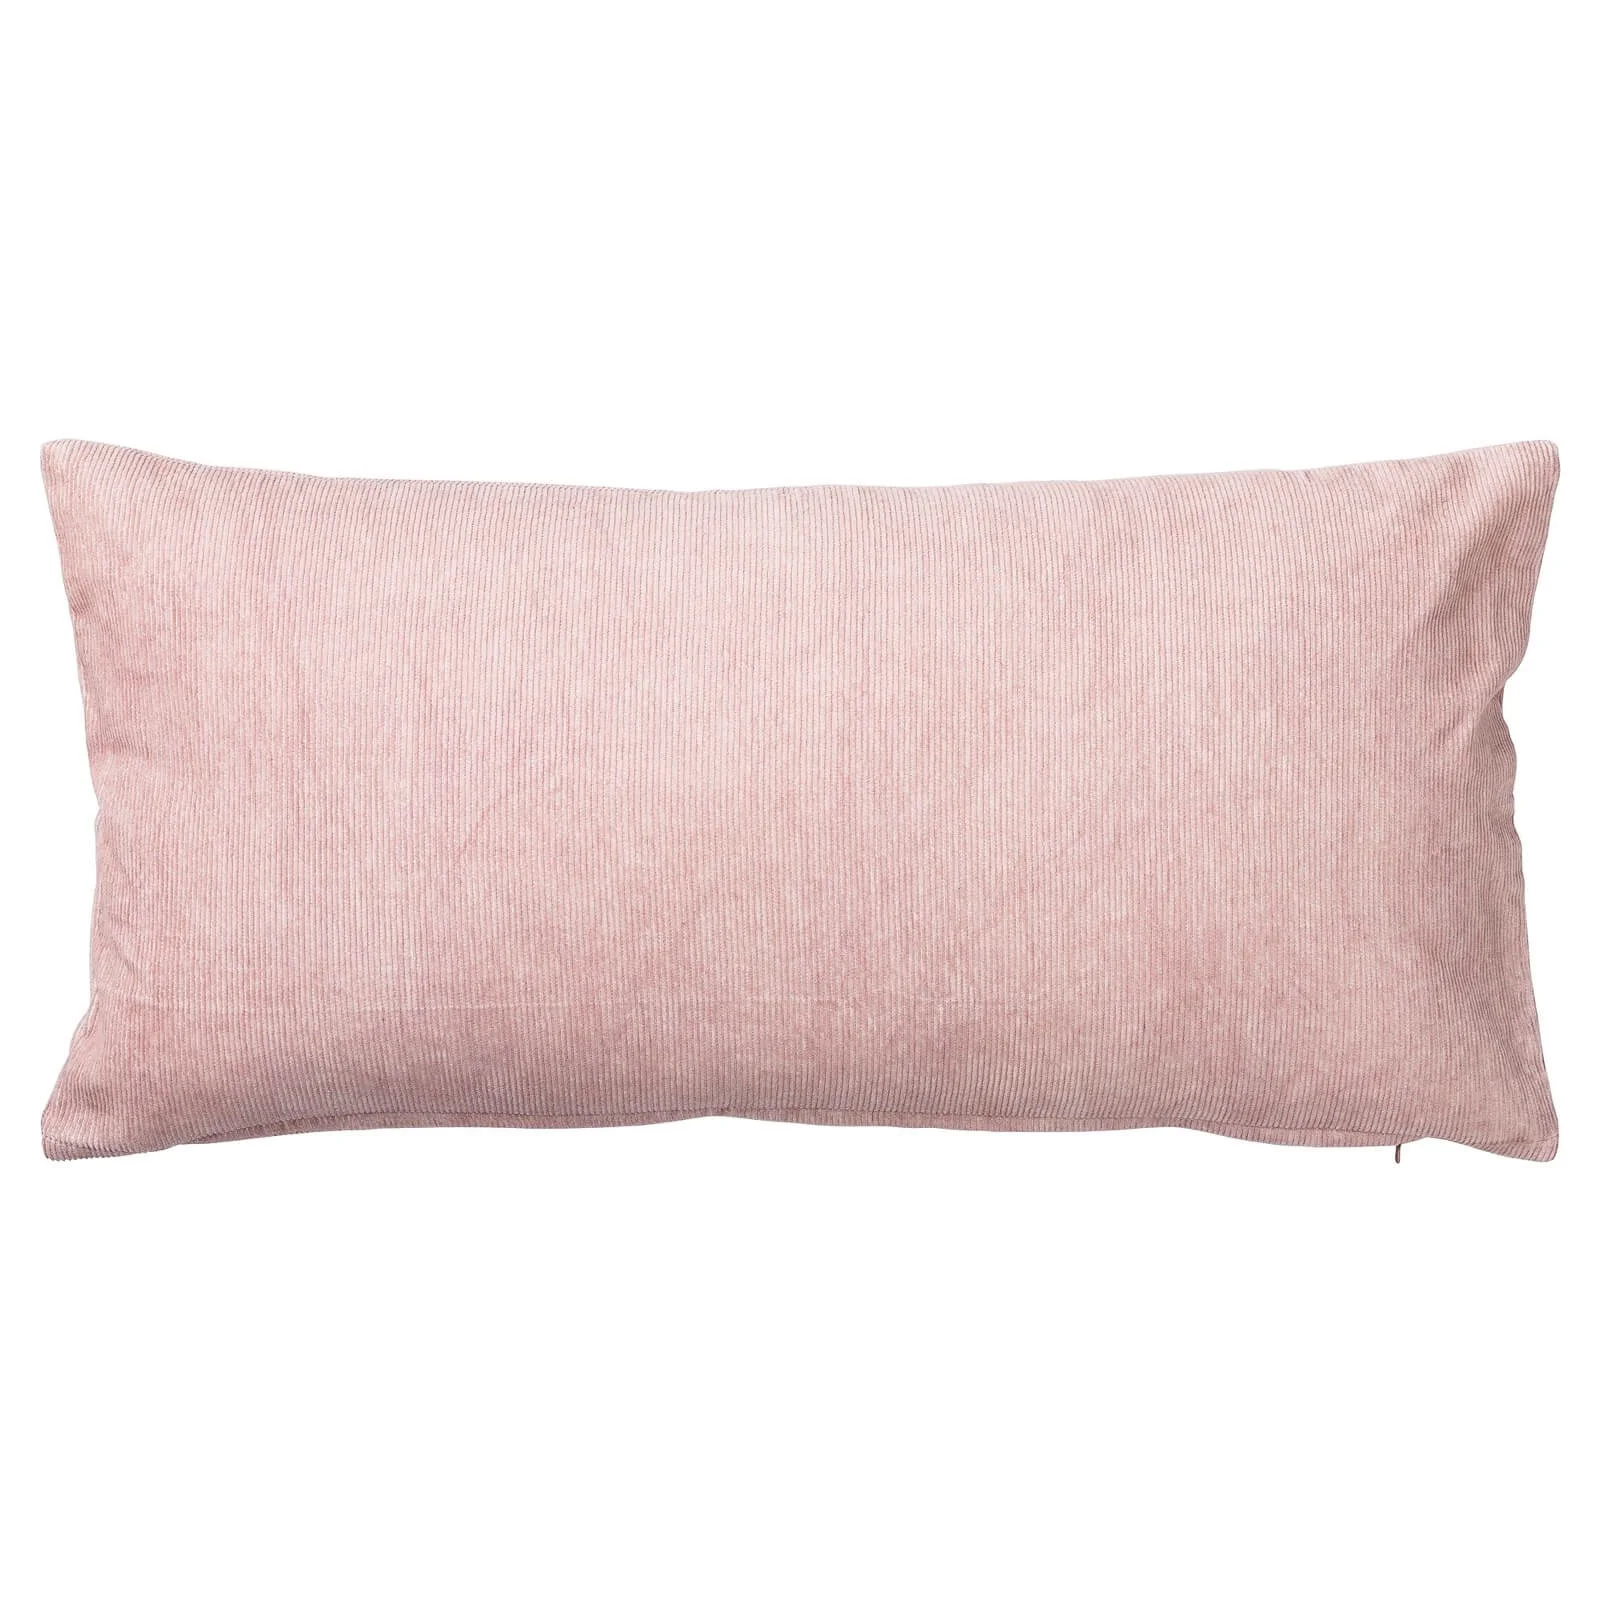 Bloomingville Cotton Cushion - Pink Image 1